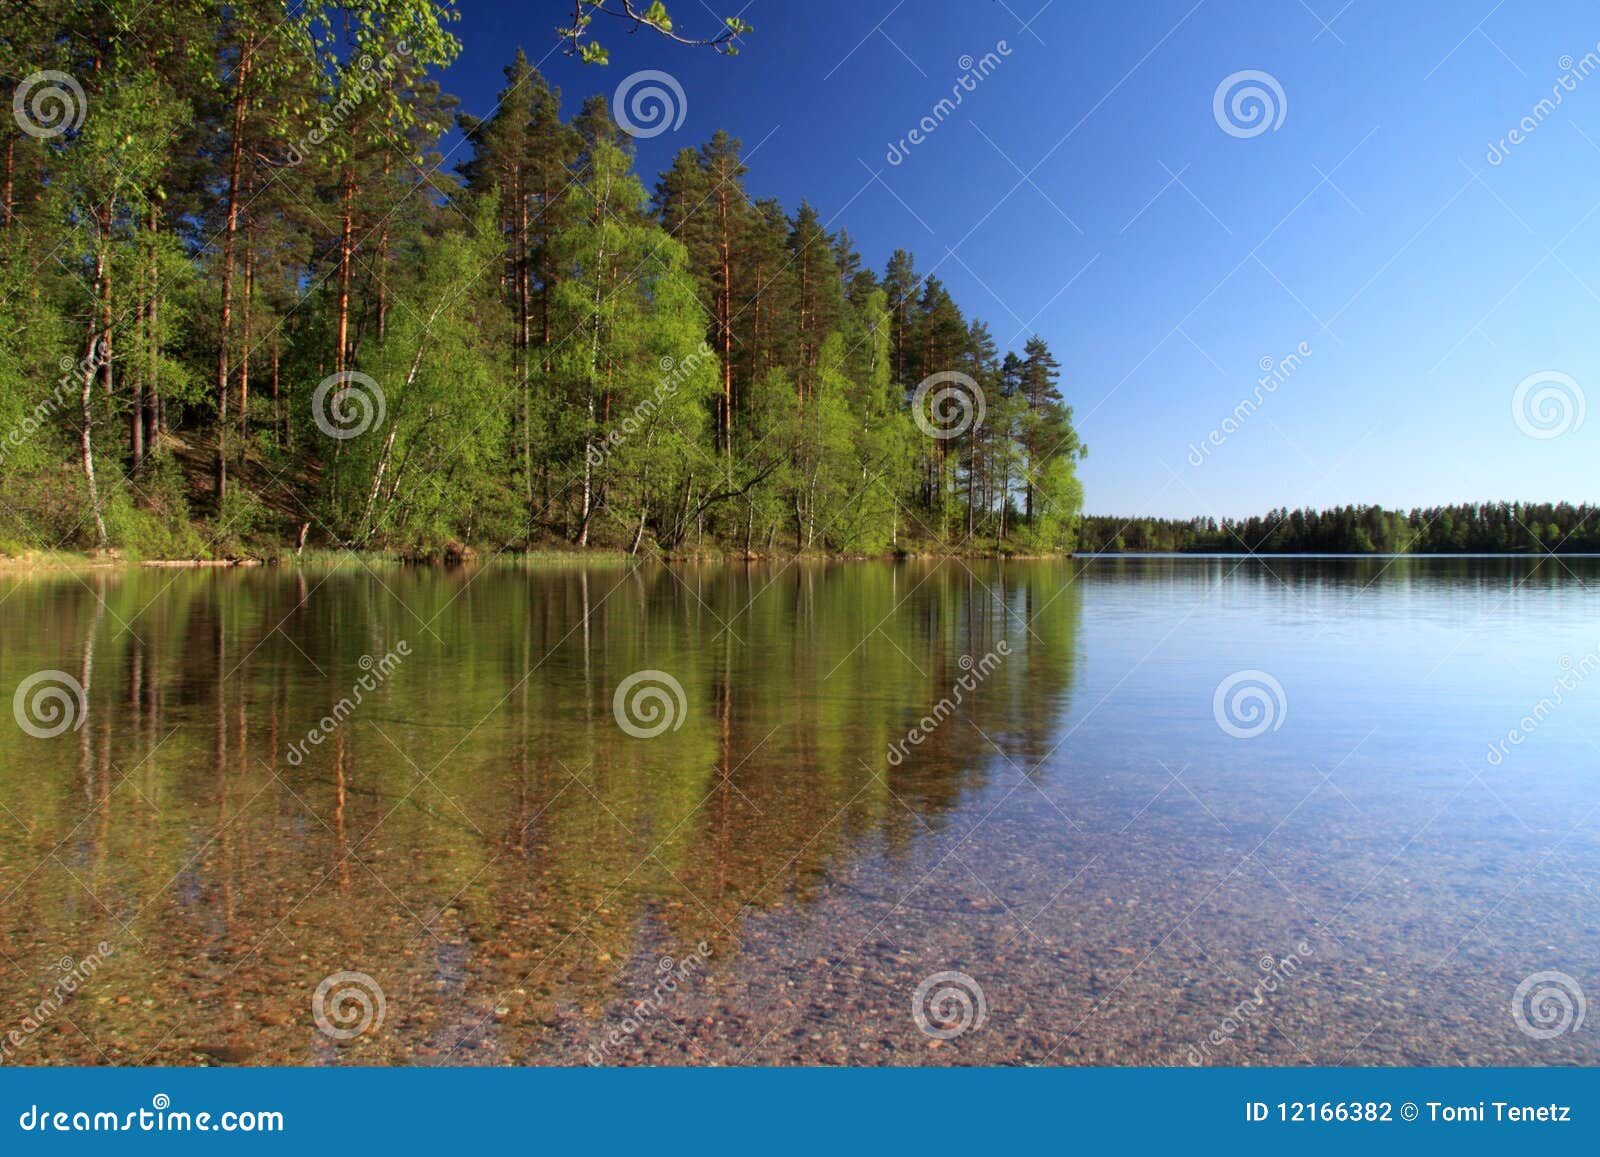 finland: summer and lake